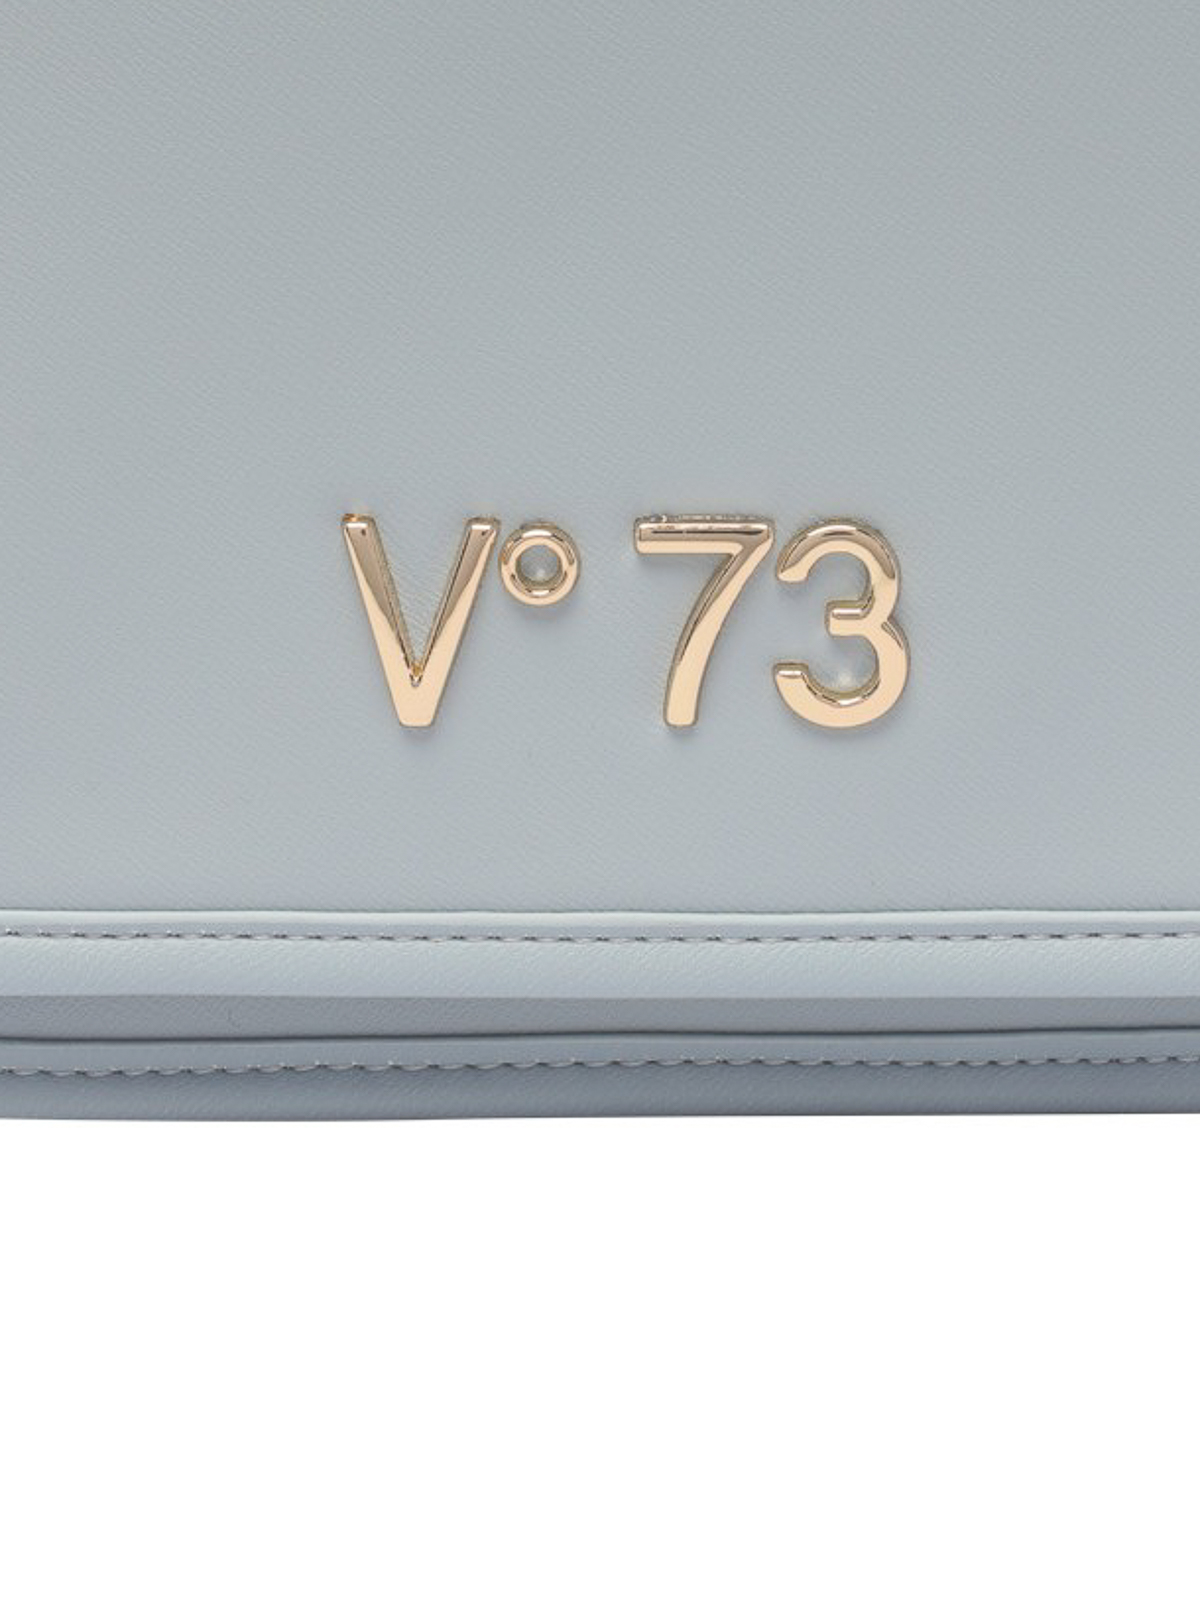 Shop V73 Iperion Bag With Strap In Blue